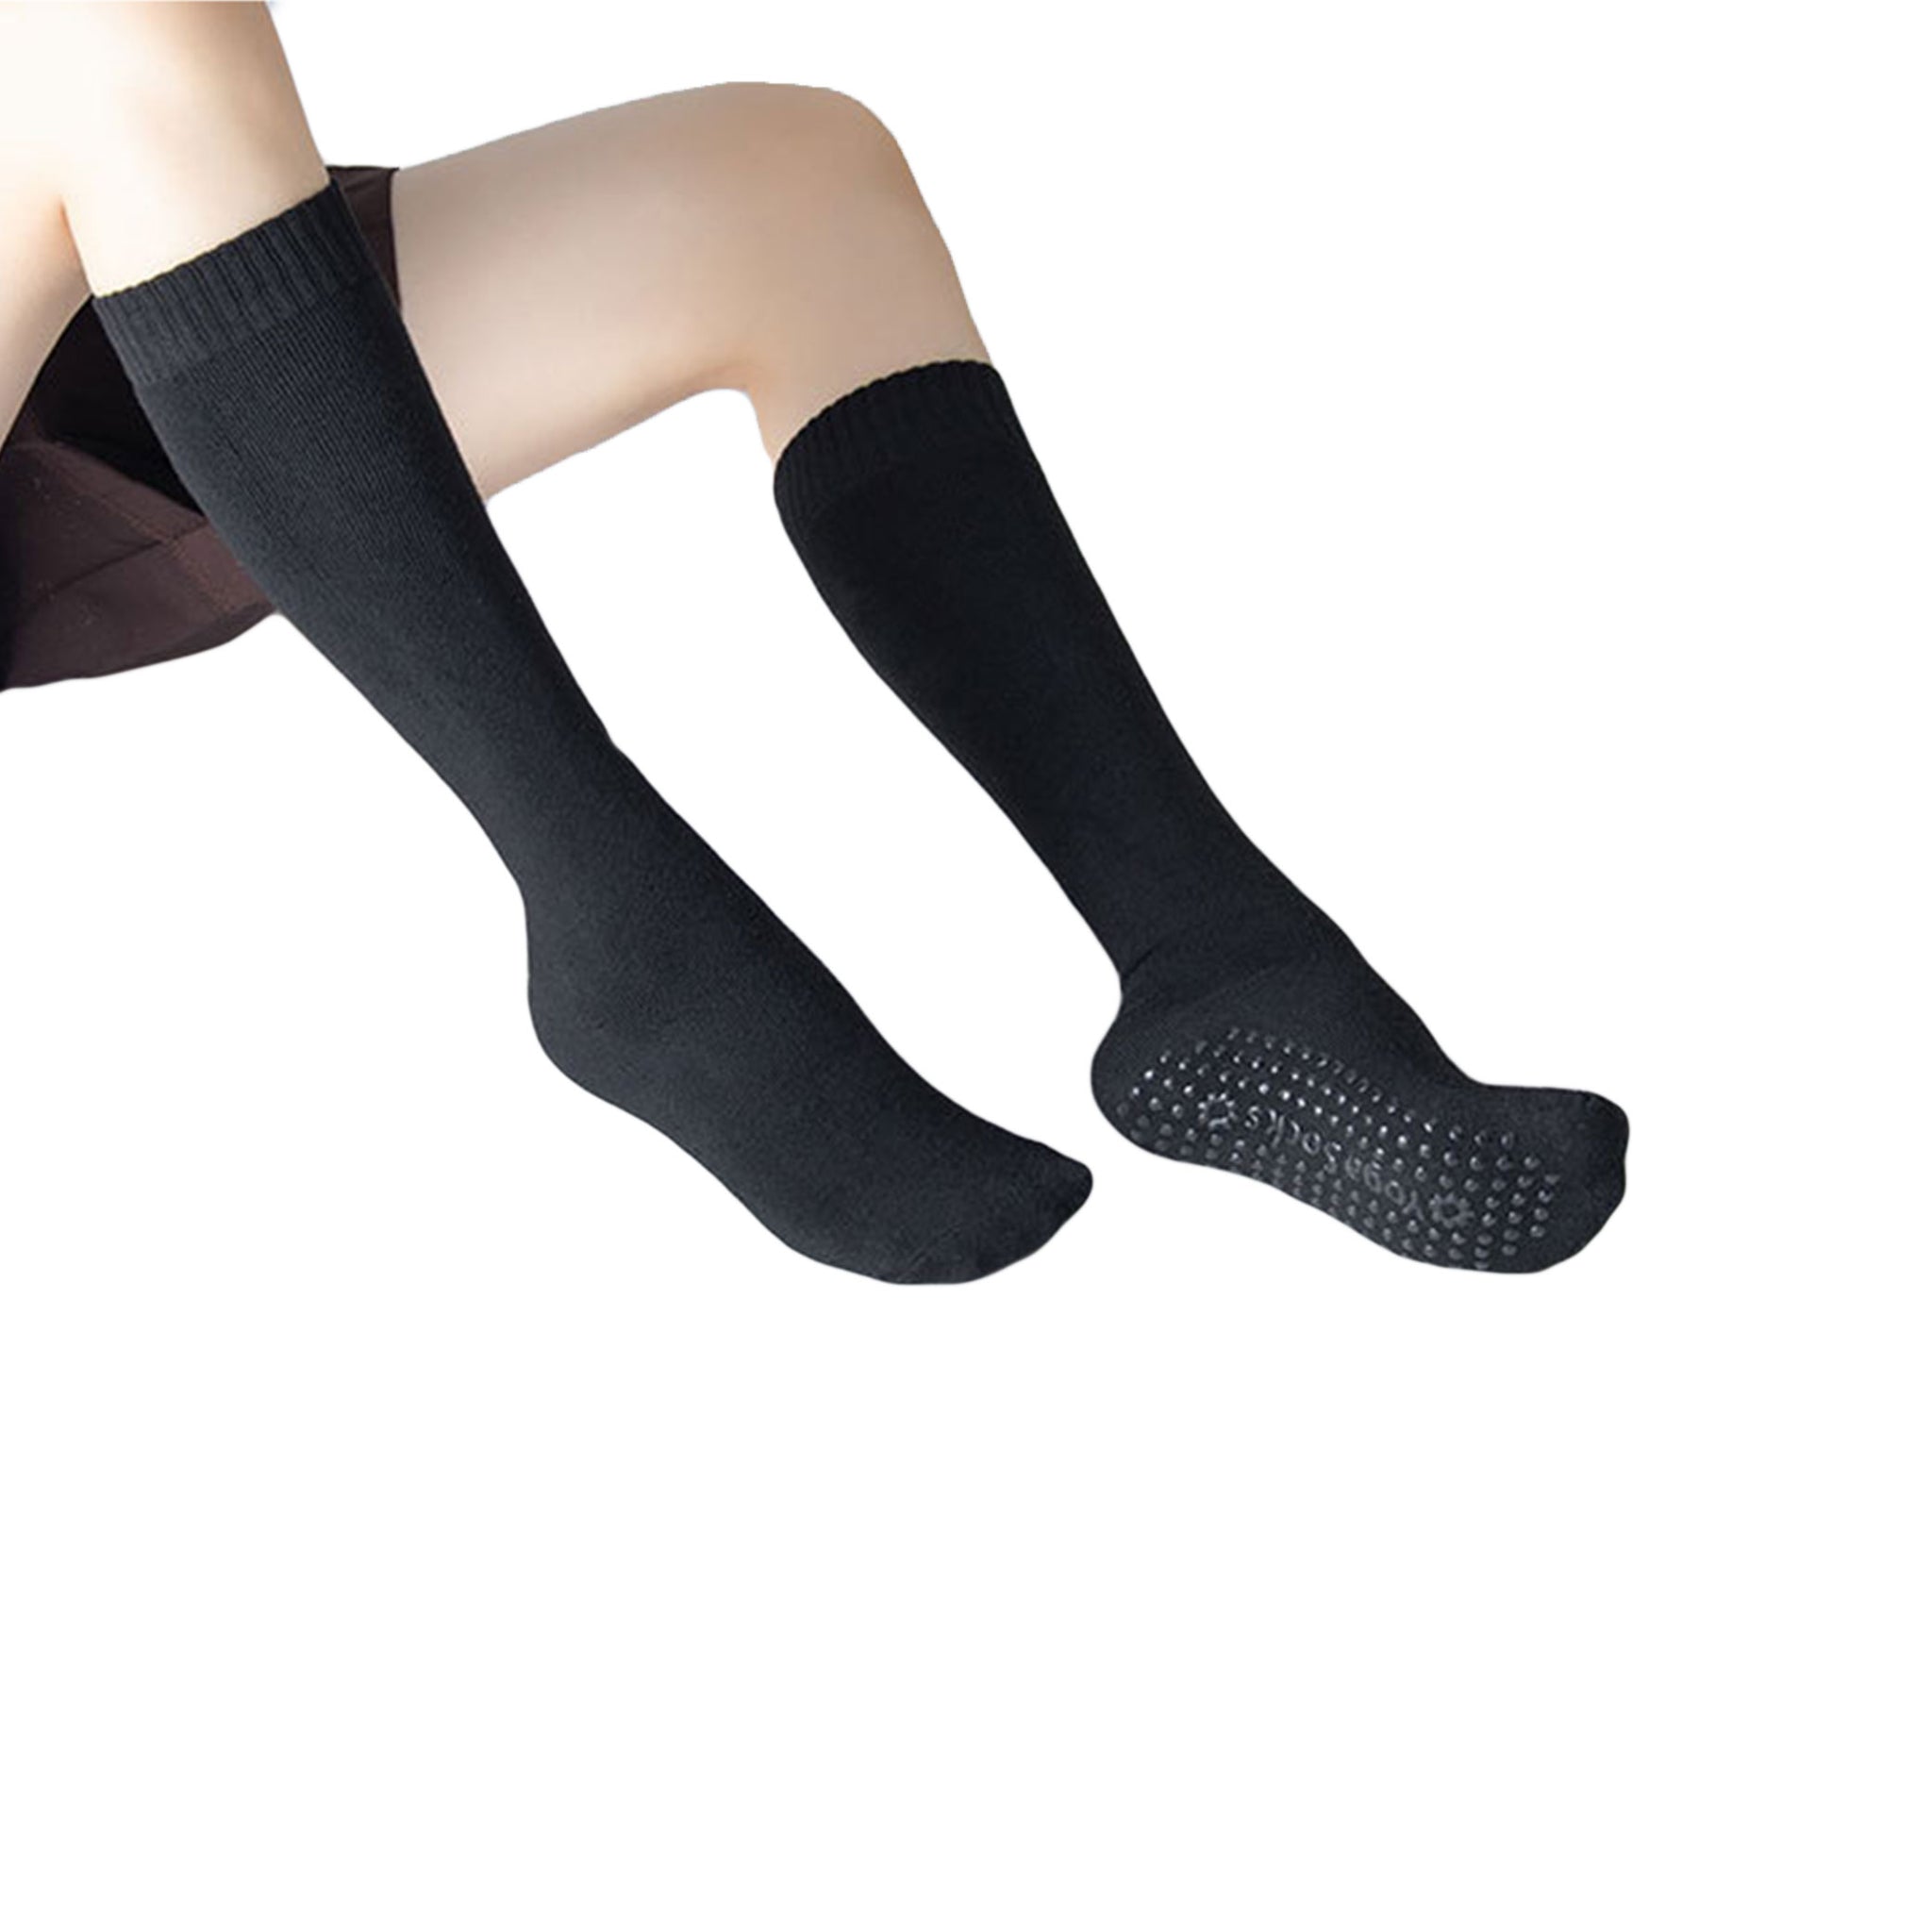 Mid-Calf Length Socks